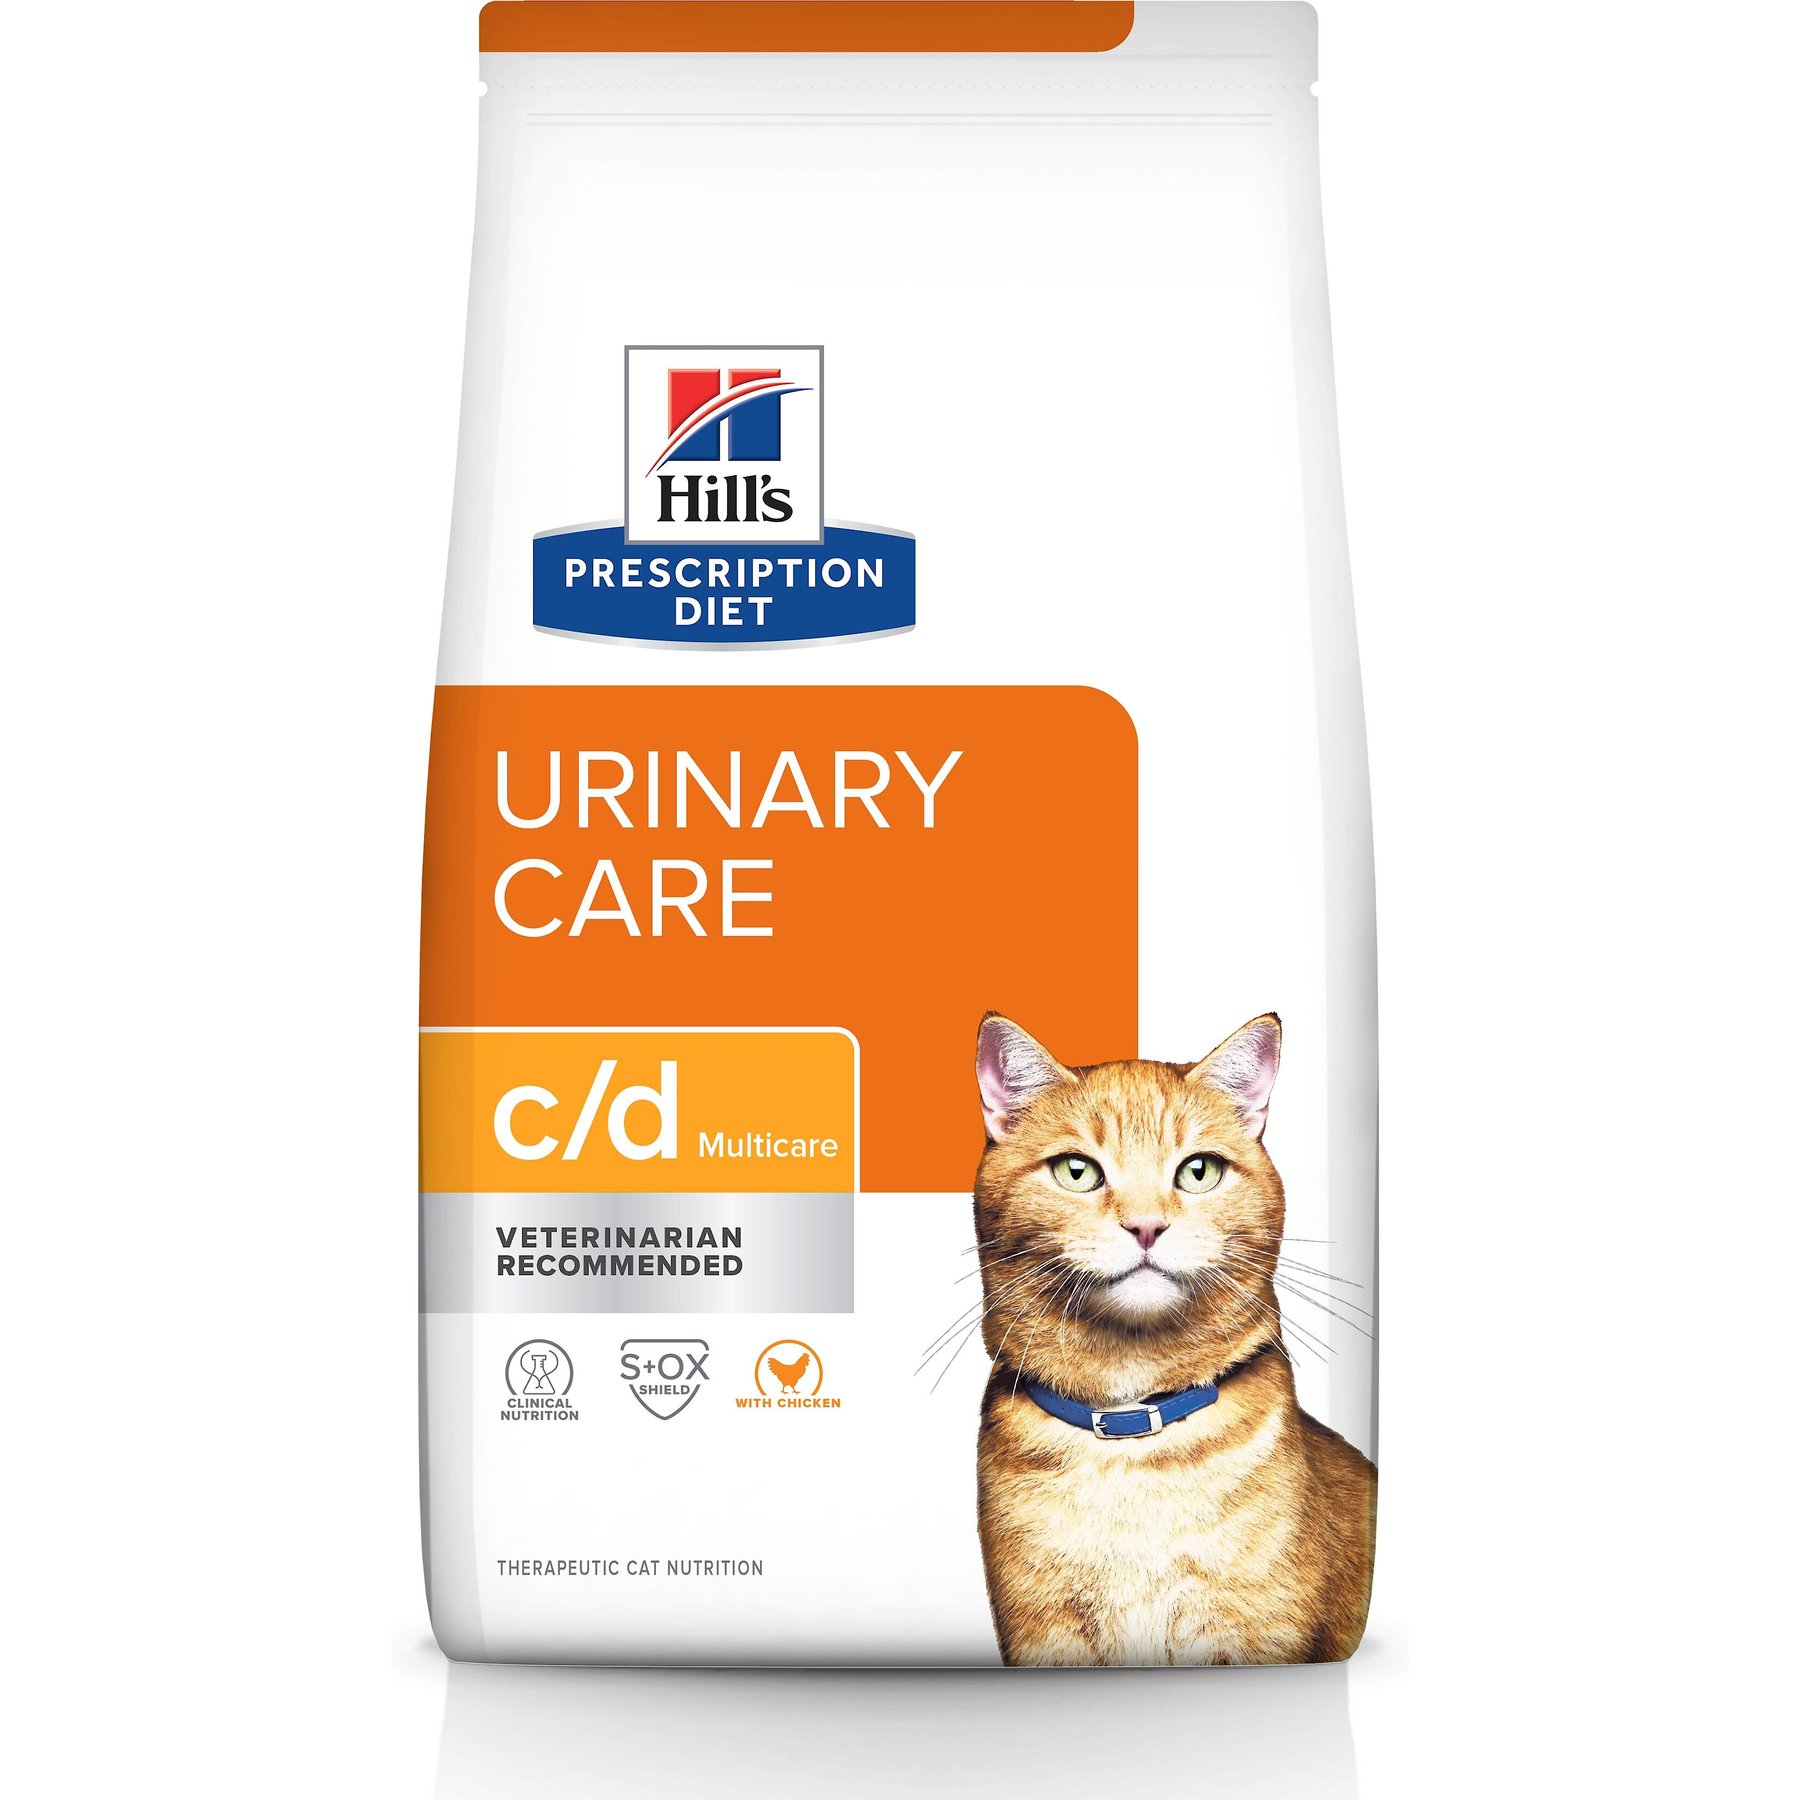  Royal Canin Urinary Treats Feline 7.7 oz. : Pet Supplies